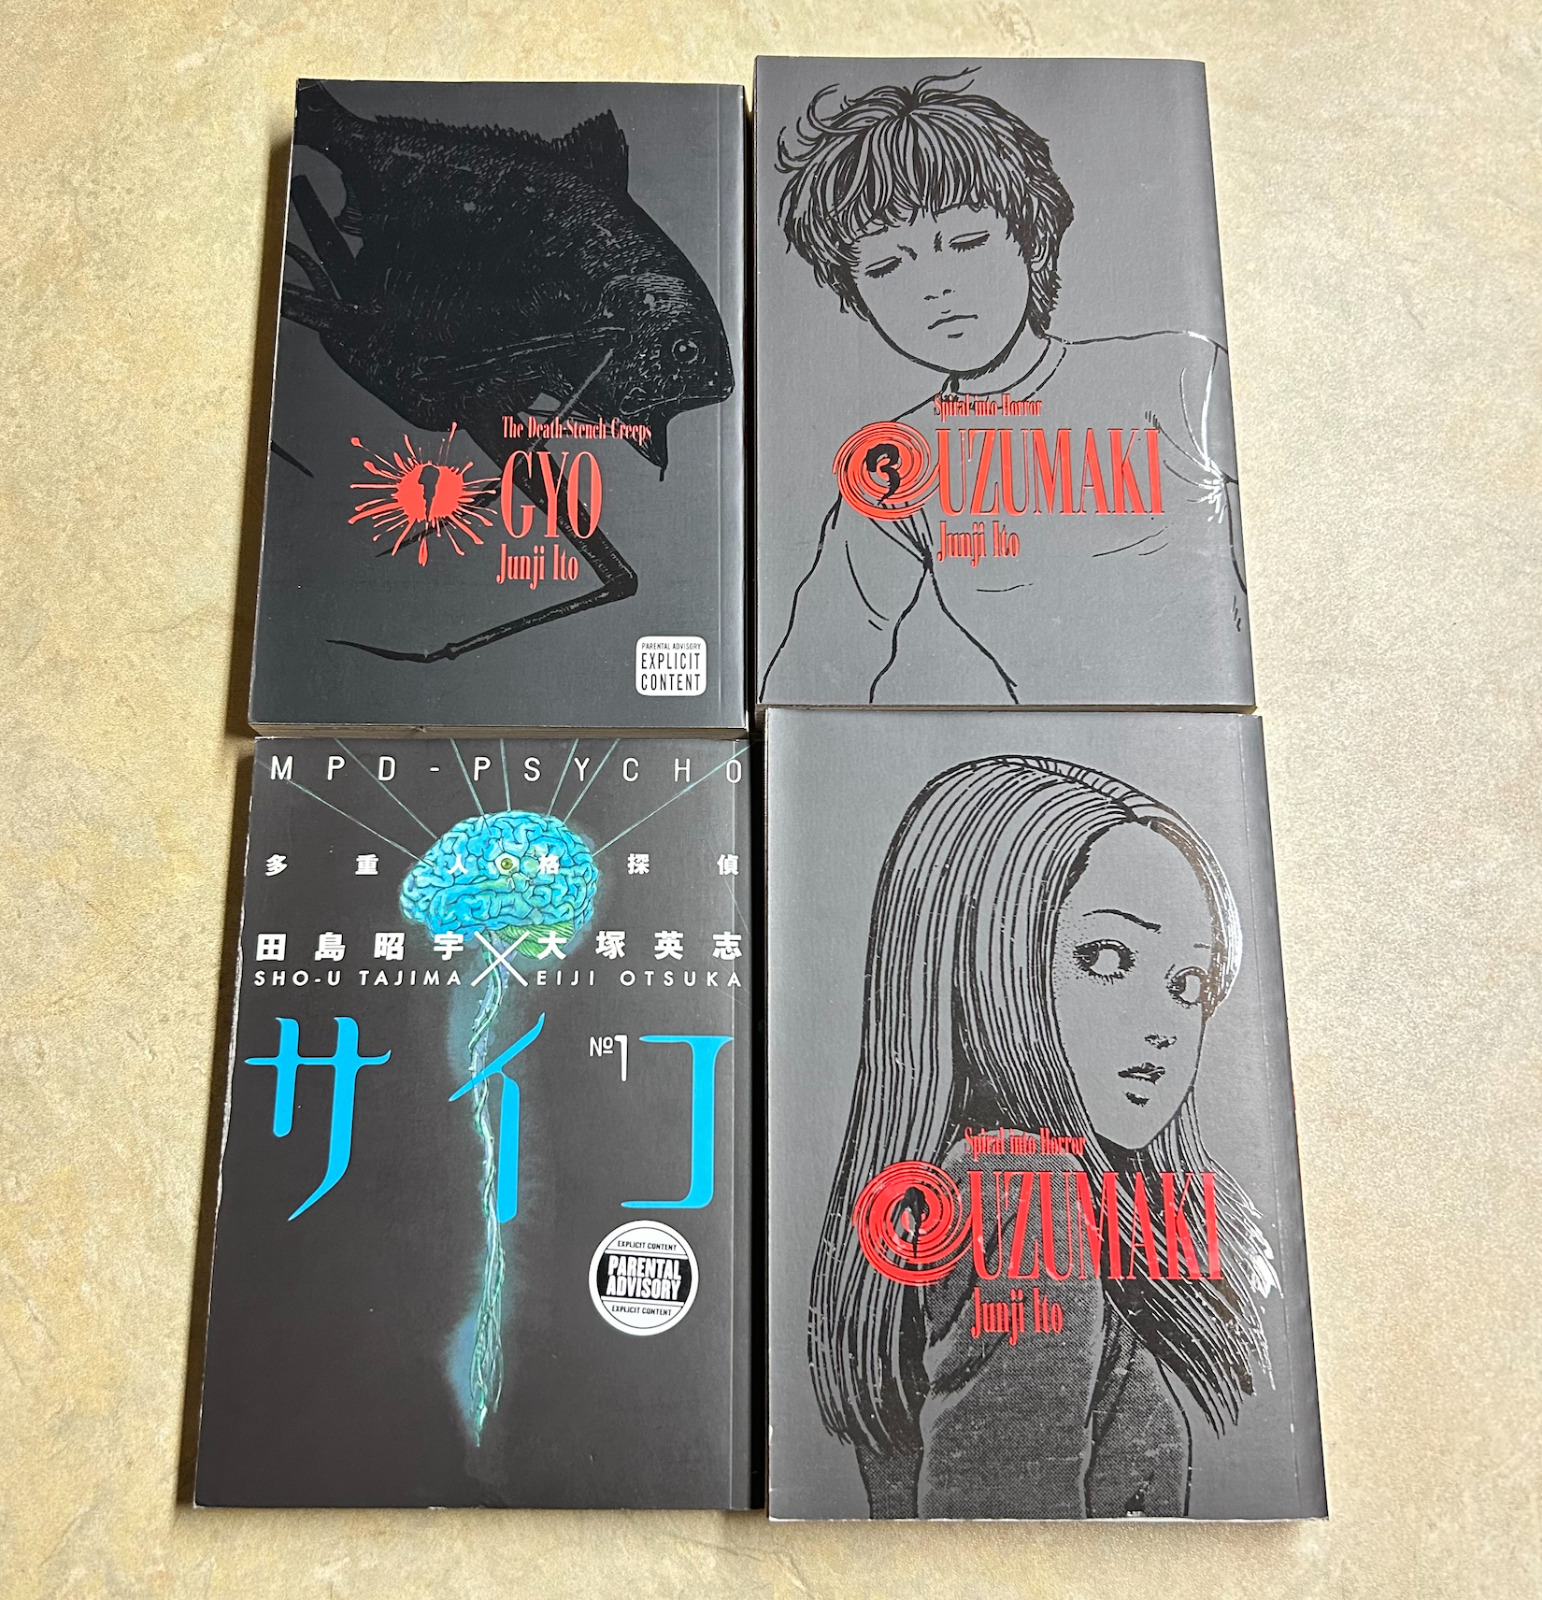 Manga Horror Set UZUMAKI 1-2, GYO 1 & MPD Psycho 1 Rare English Junji Ito